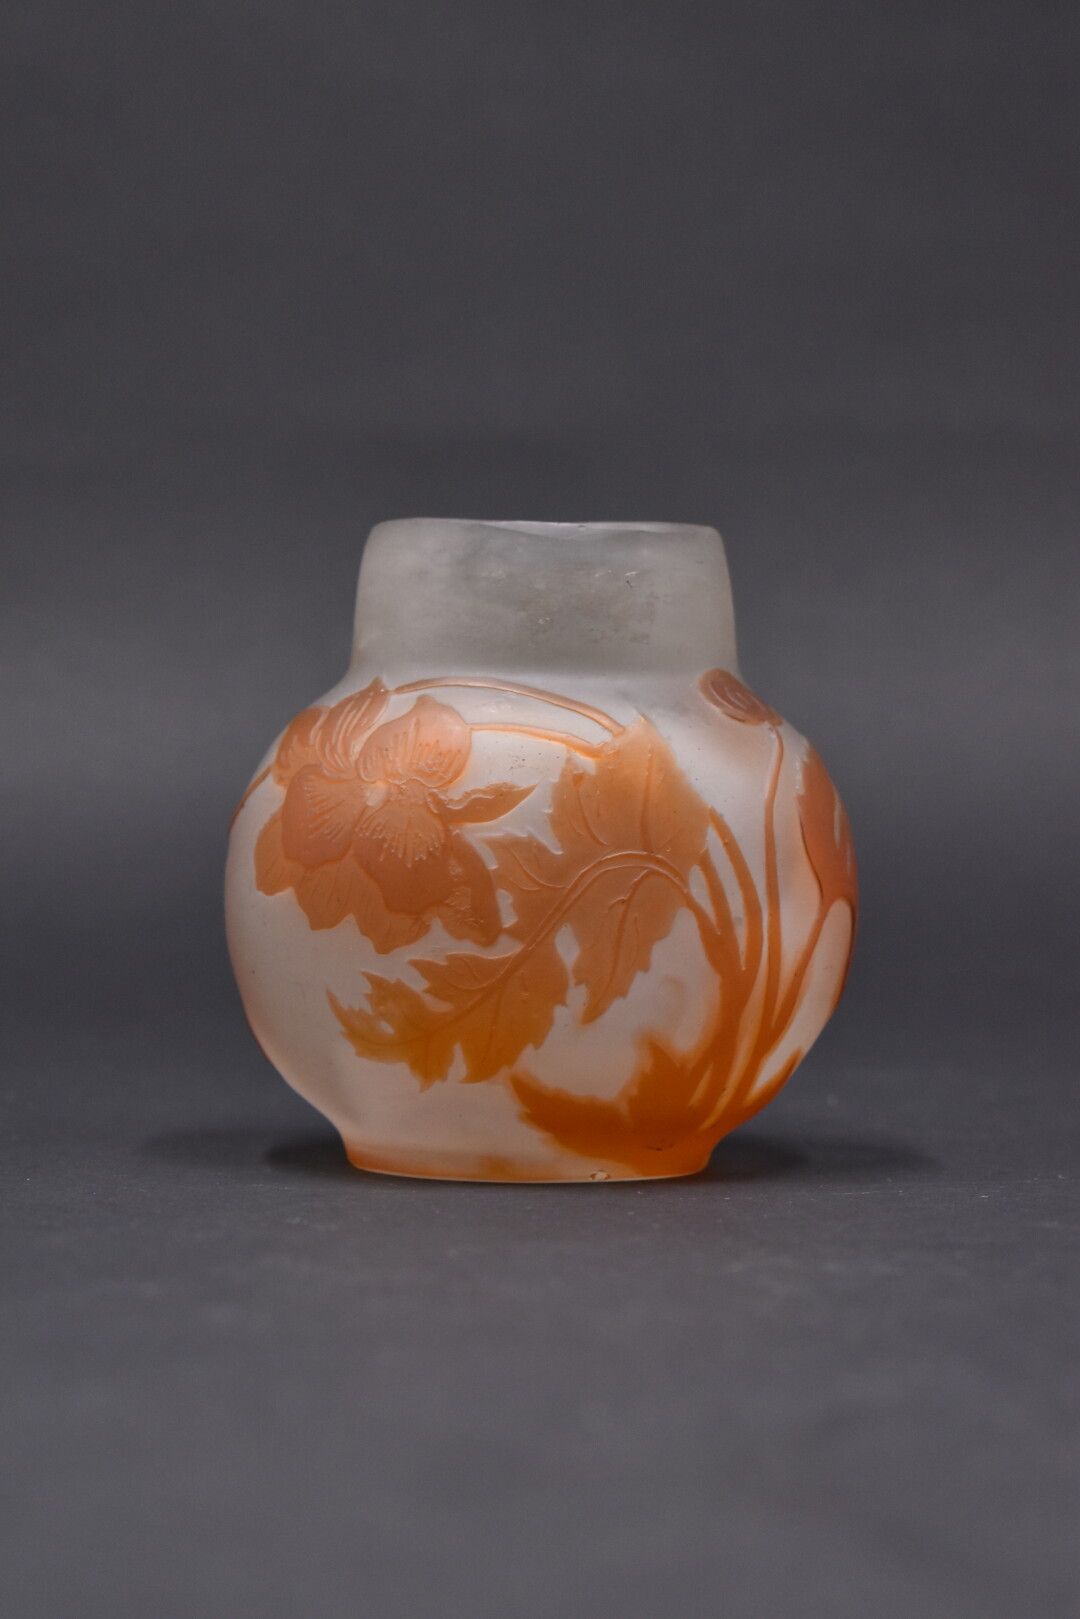 Null etablissements galle (1904-1936).球形花瓶，管状颈部。白色背景上的橙色内衬玻璃证明。花卉装饰用浮雕的方式刻上酸。签名。&hellip;